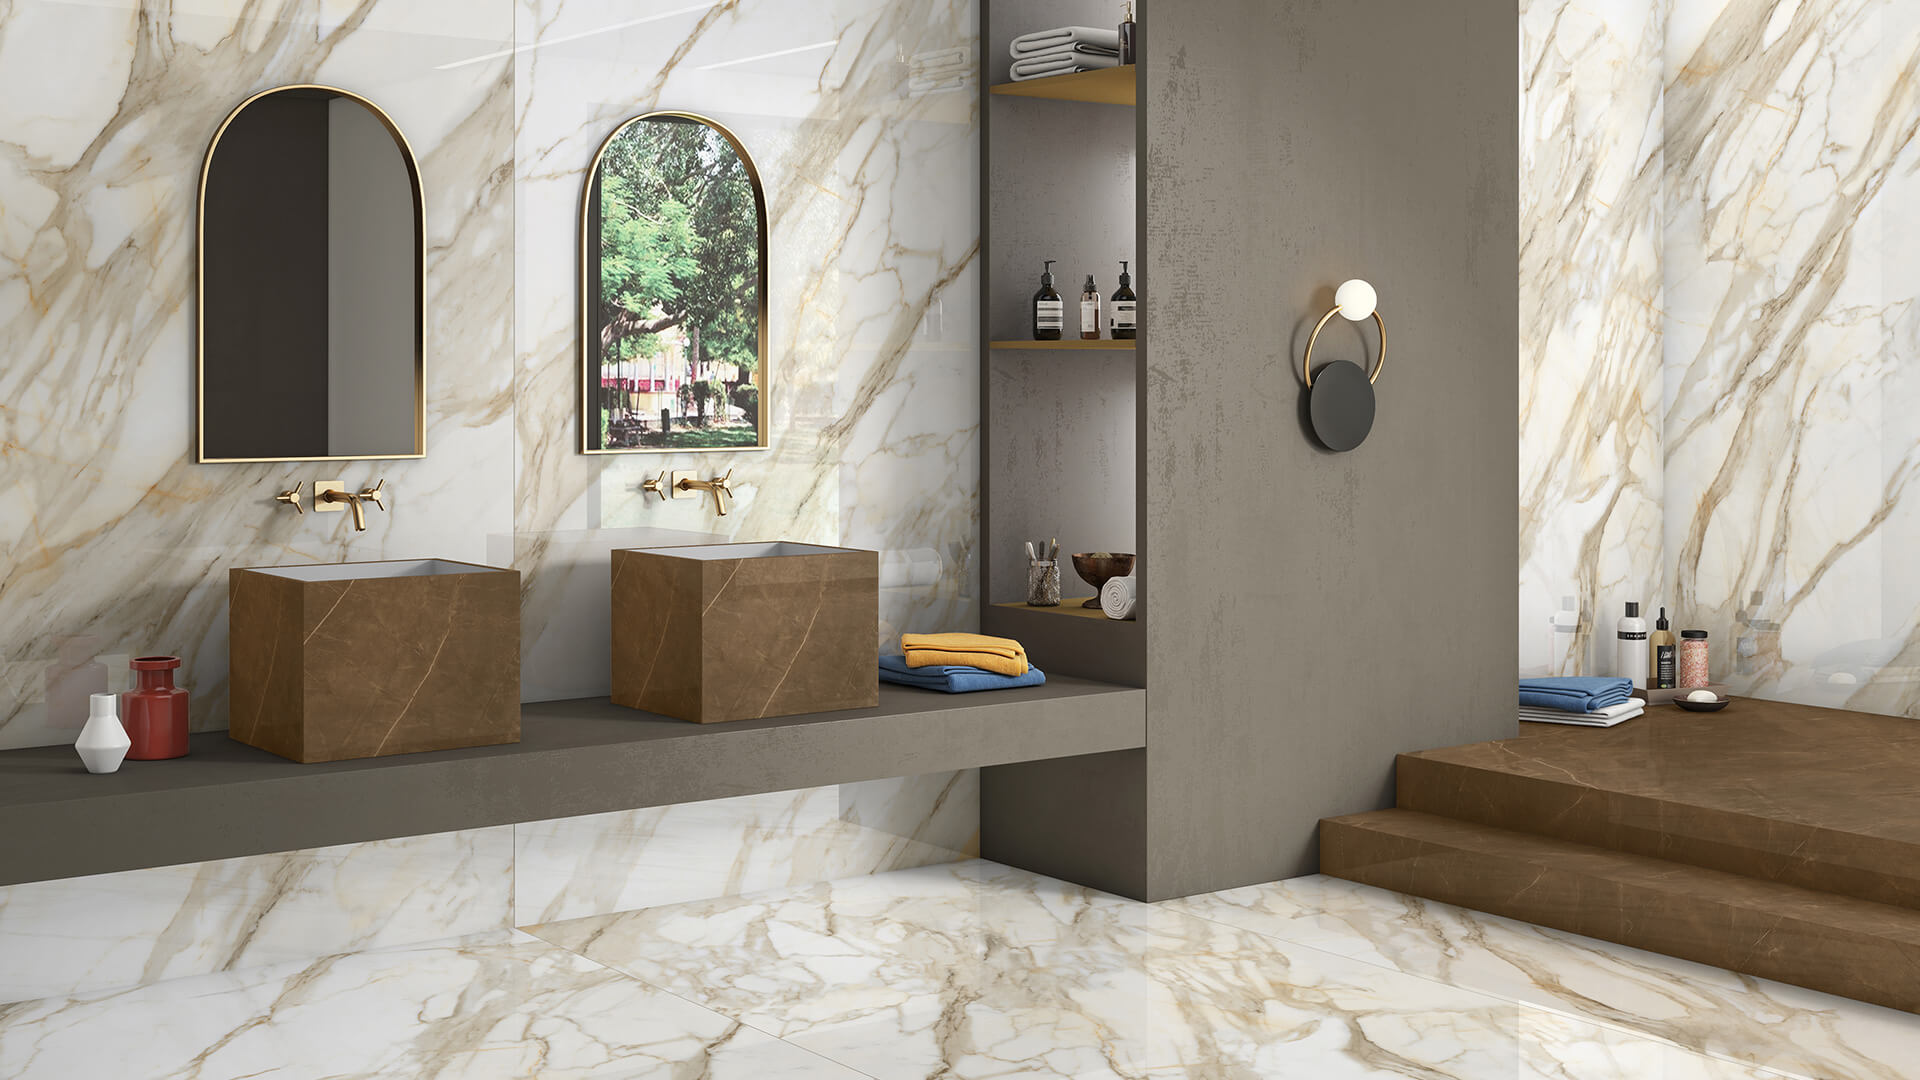 Can we use porcelain tiles for bathroom floors